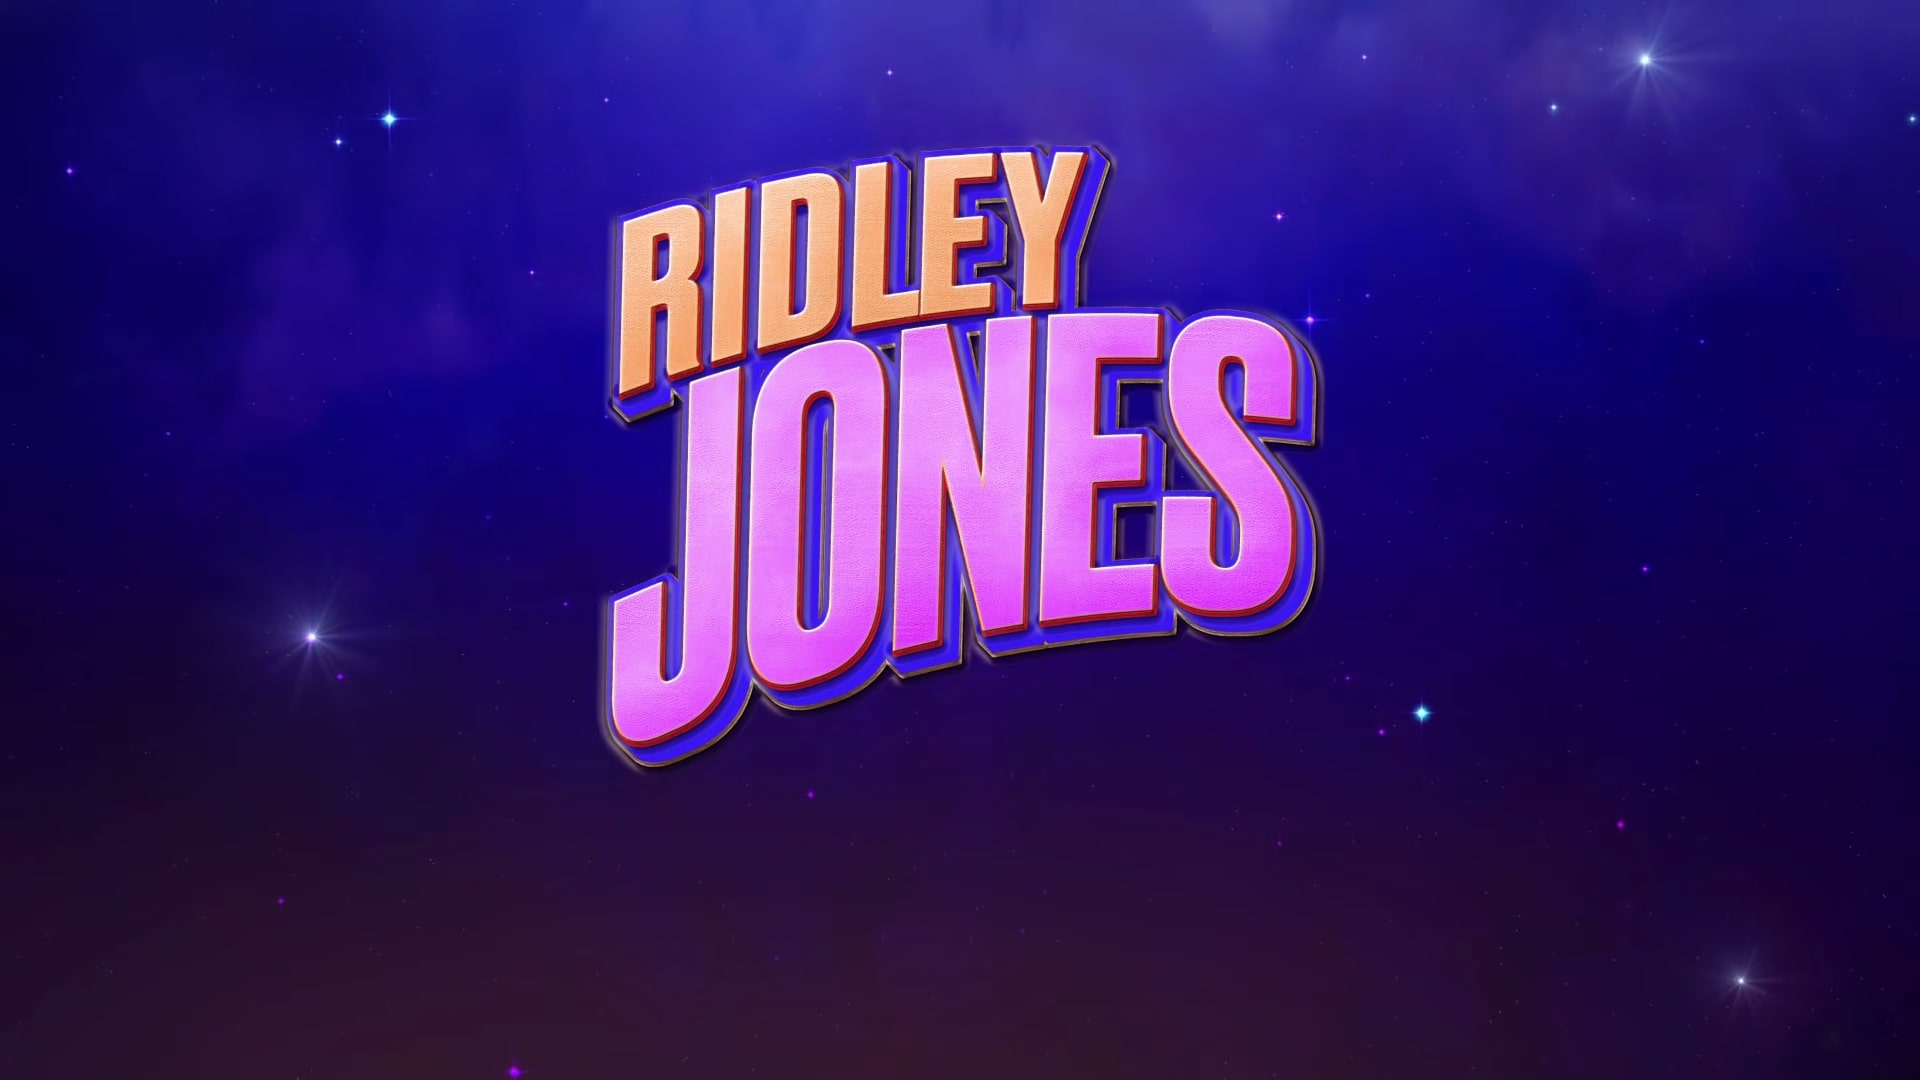 Ridley Jones Official Trailer Netflix, Coming to Netflix in July 2021